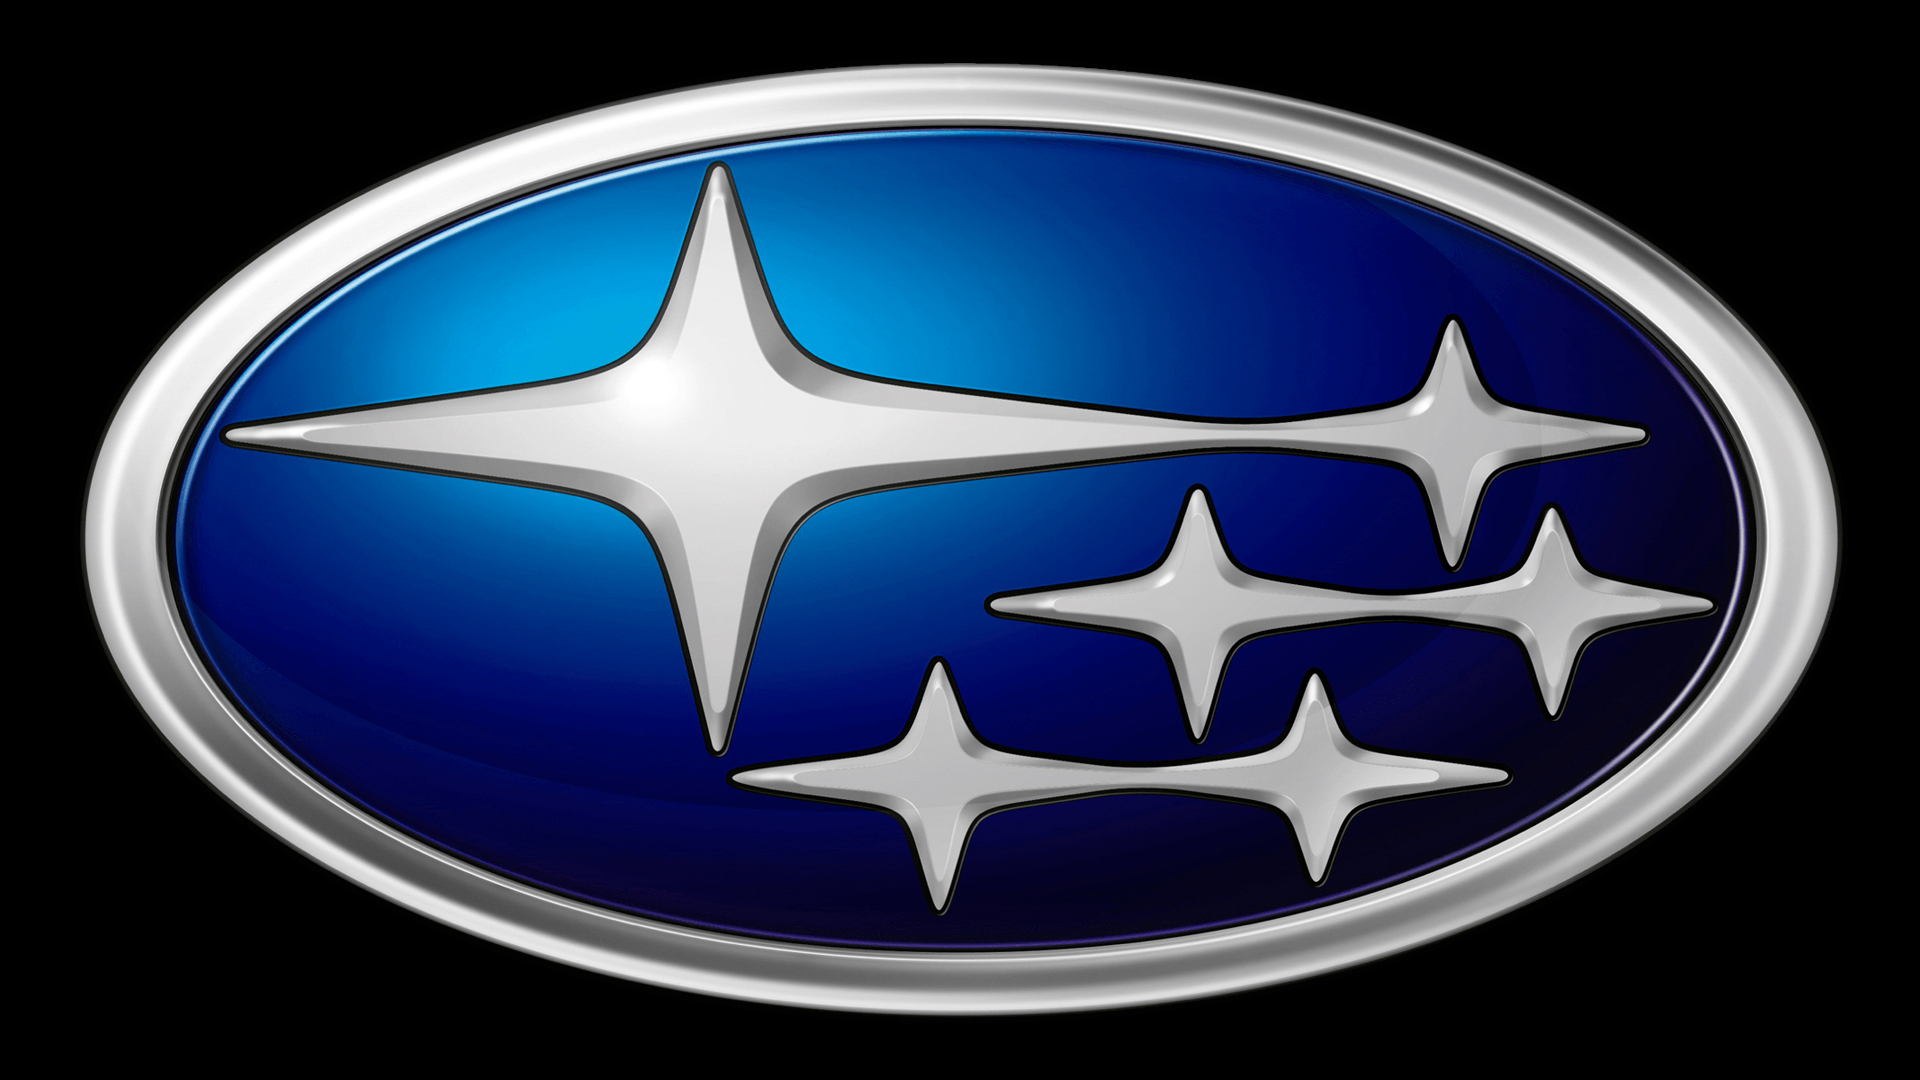 Meaning Subaru logo and symbol.